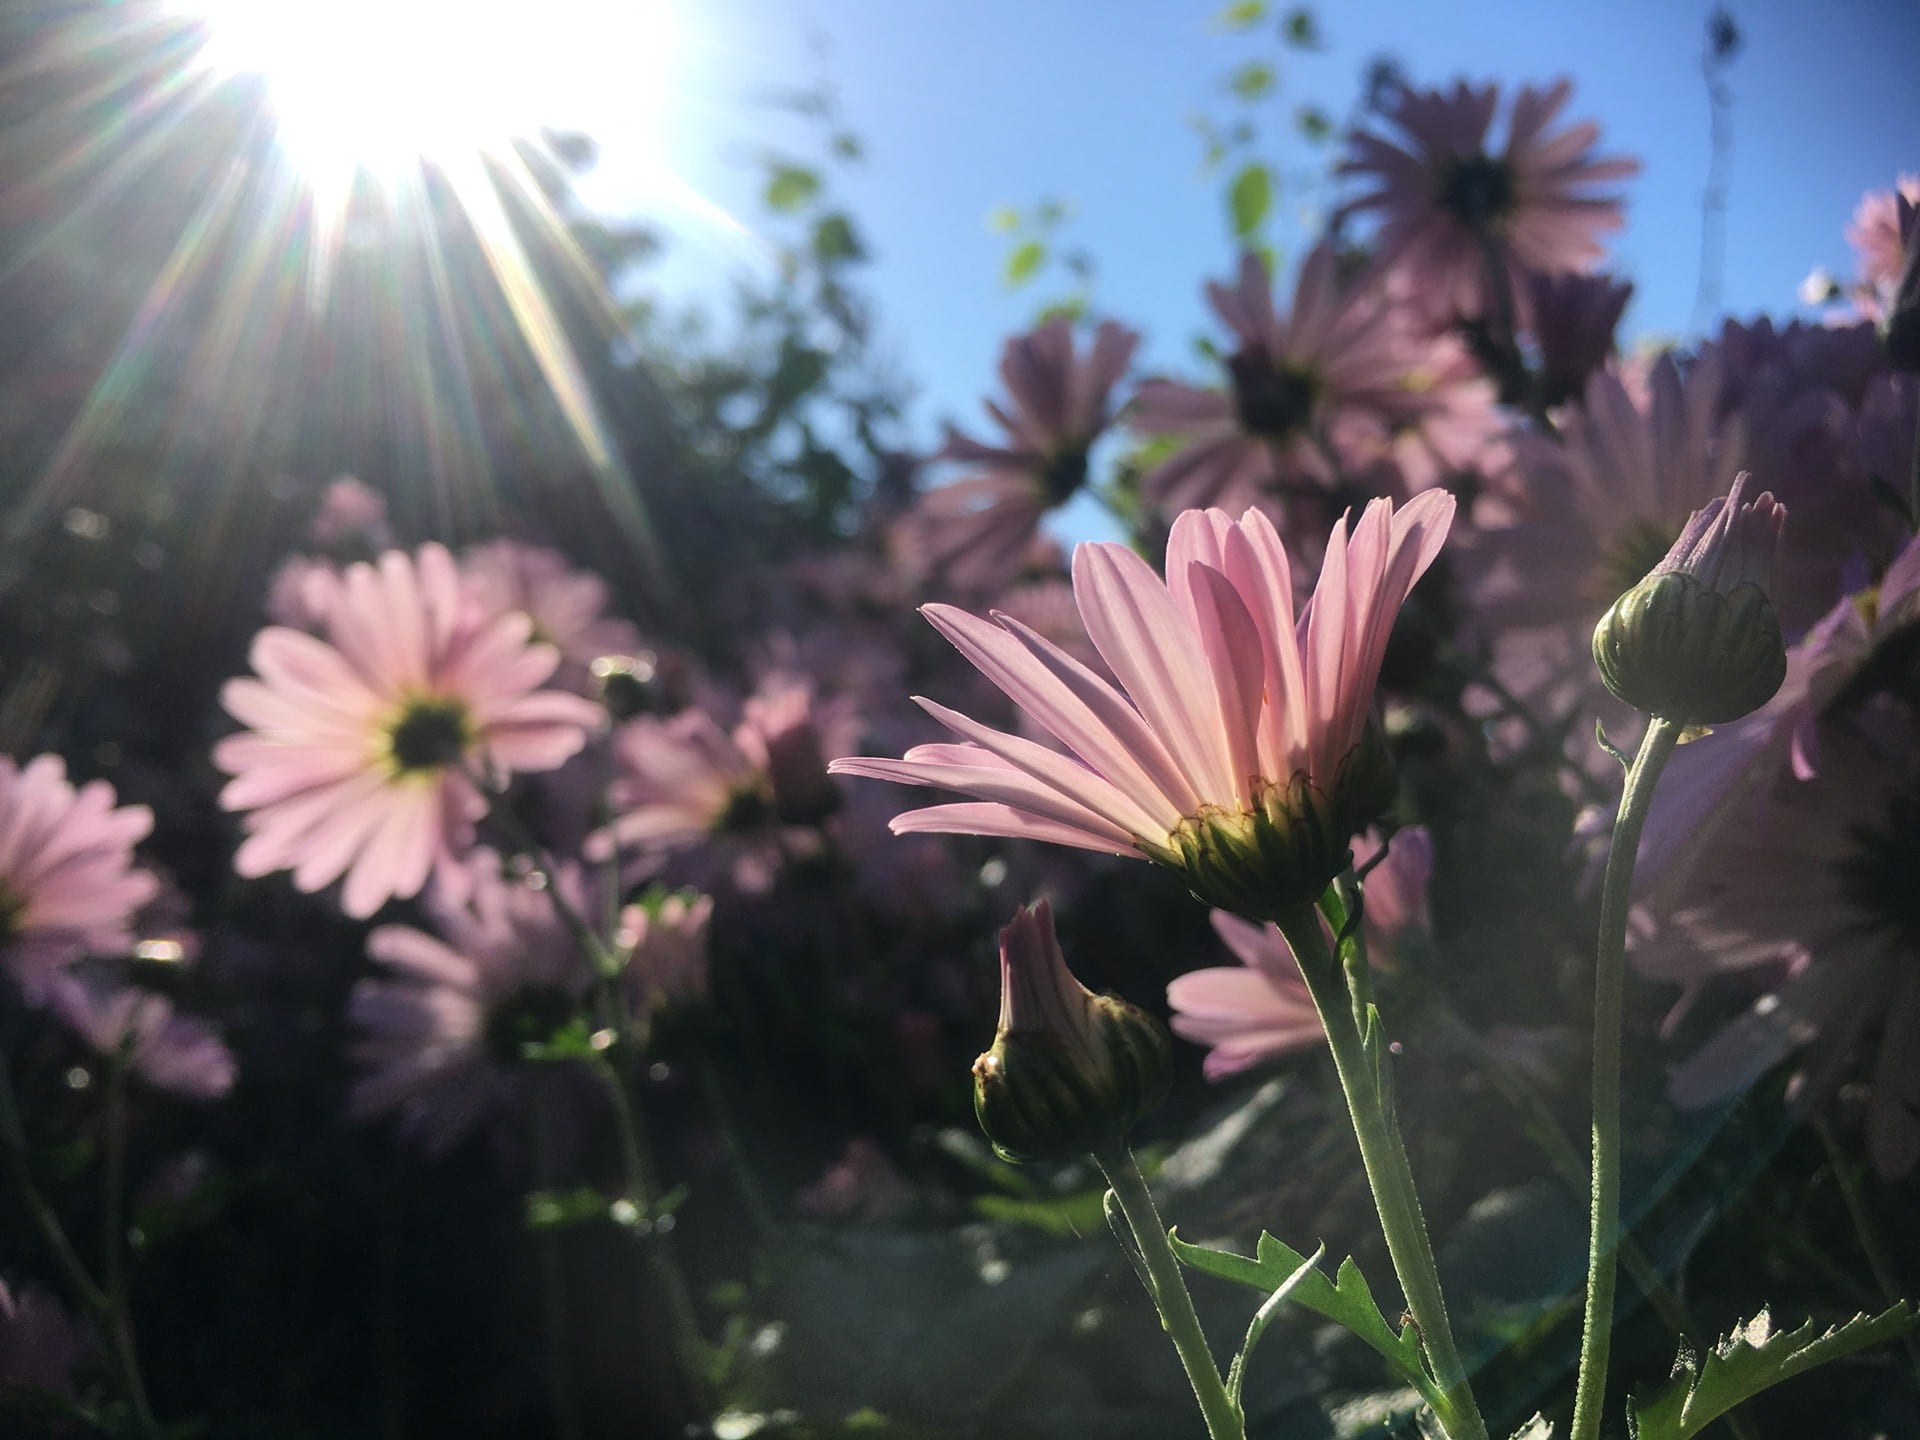 Chrysanthemum x rubellum 'Clara Curtis' reaches for the sunlight.